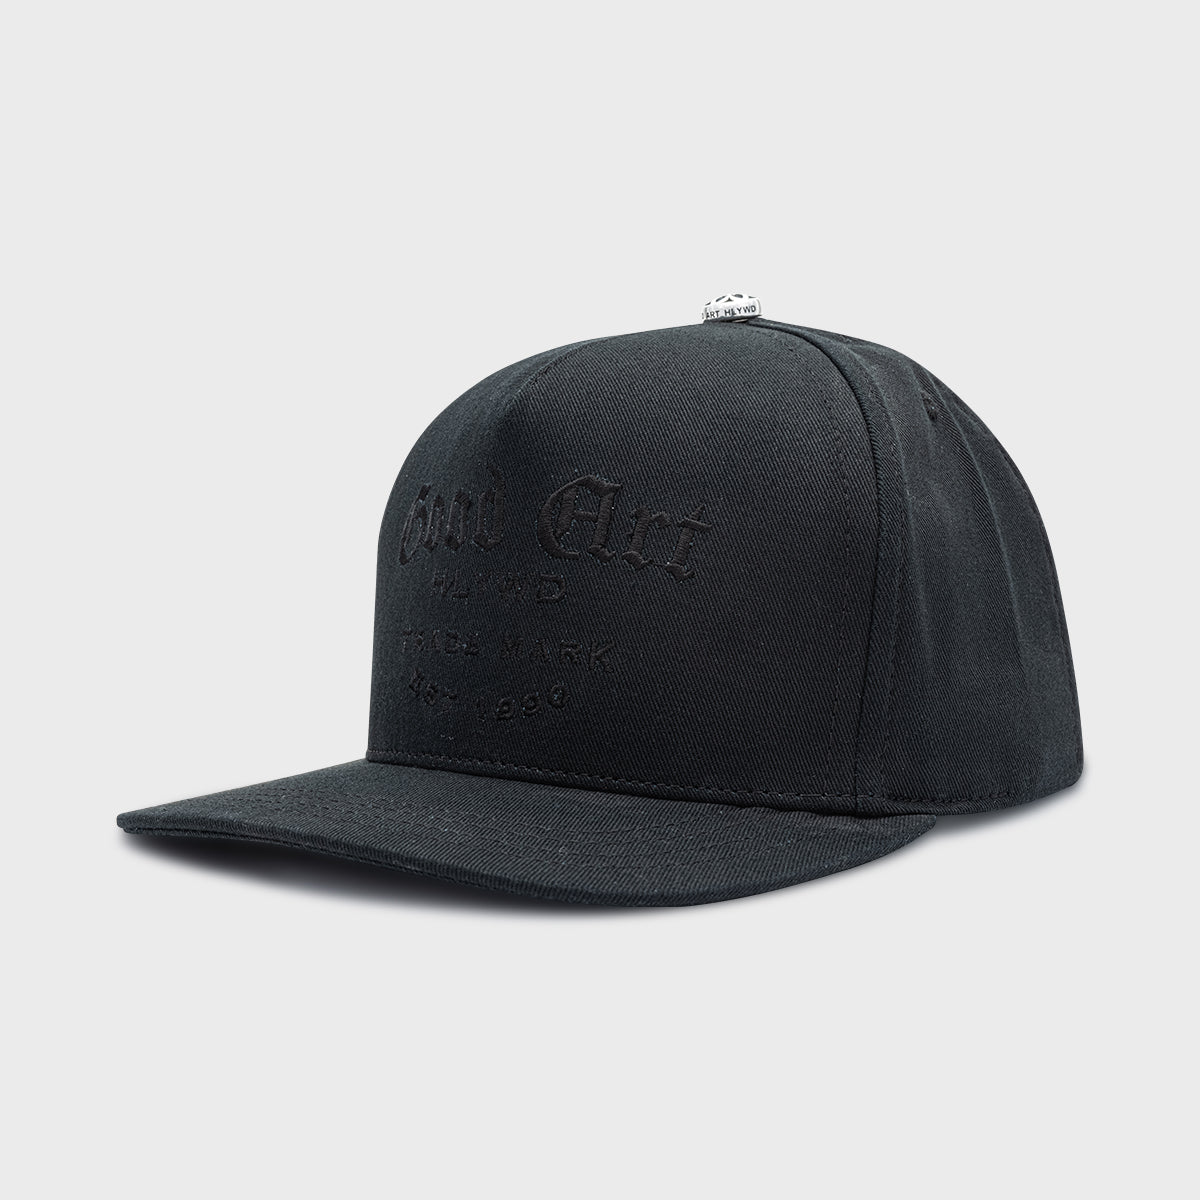 All Black High Crown Snapback Cap